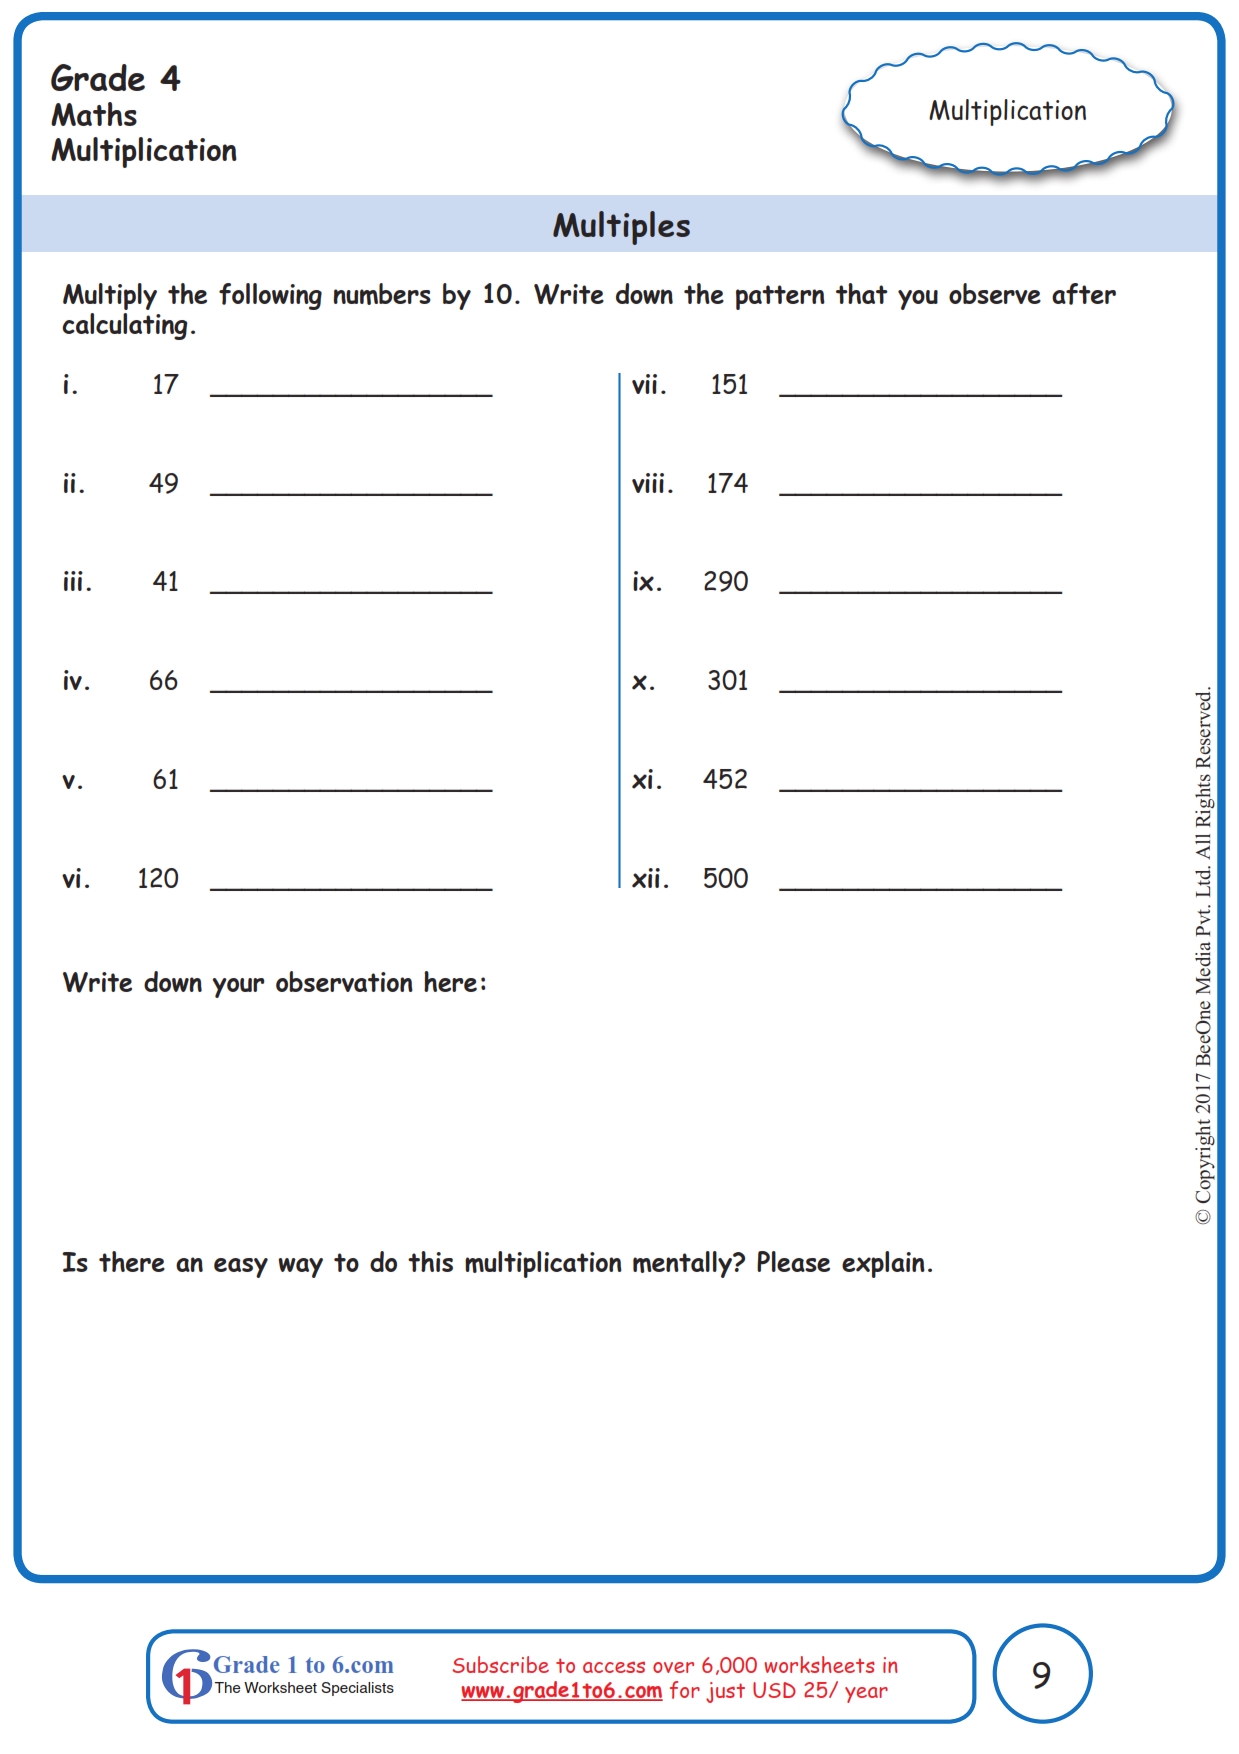 Multiples Worksheet 4th Grade Pdf